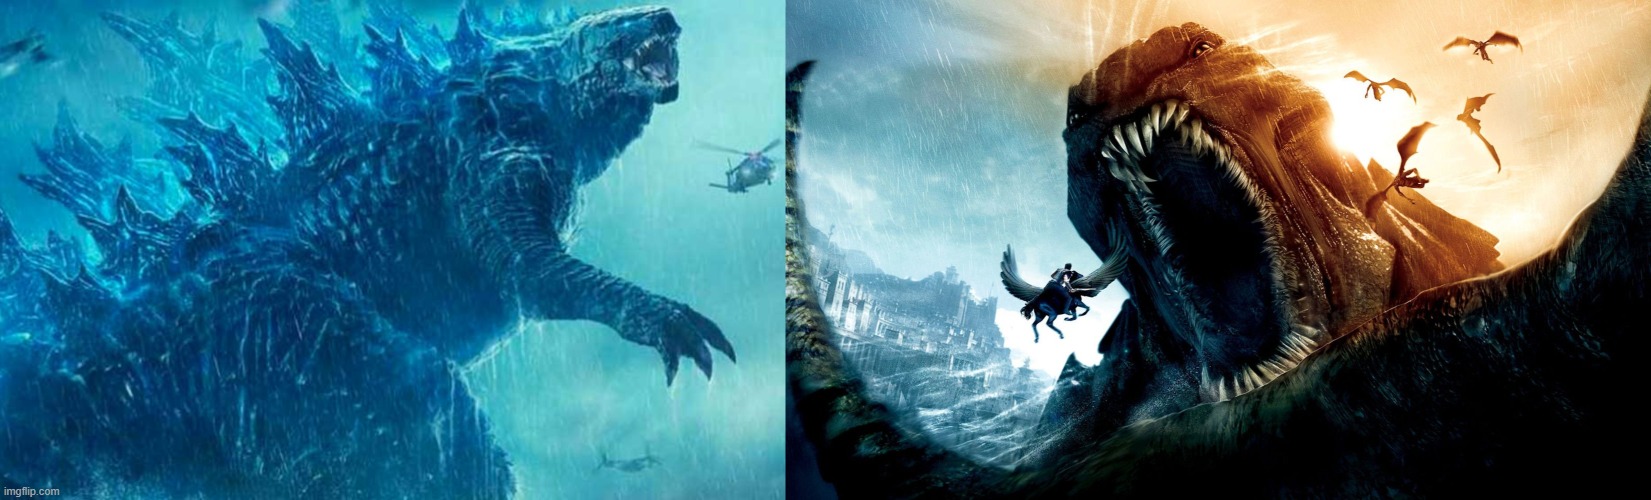 Godzilla vs. Kraken: 5 Reasons Godzilla Bites the Dust (& 5 Reasons Kraken Loses)